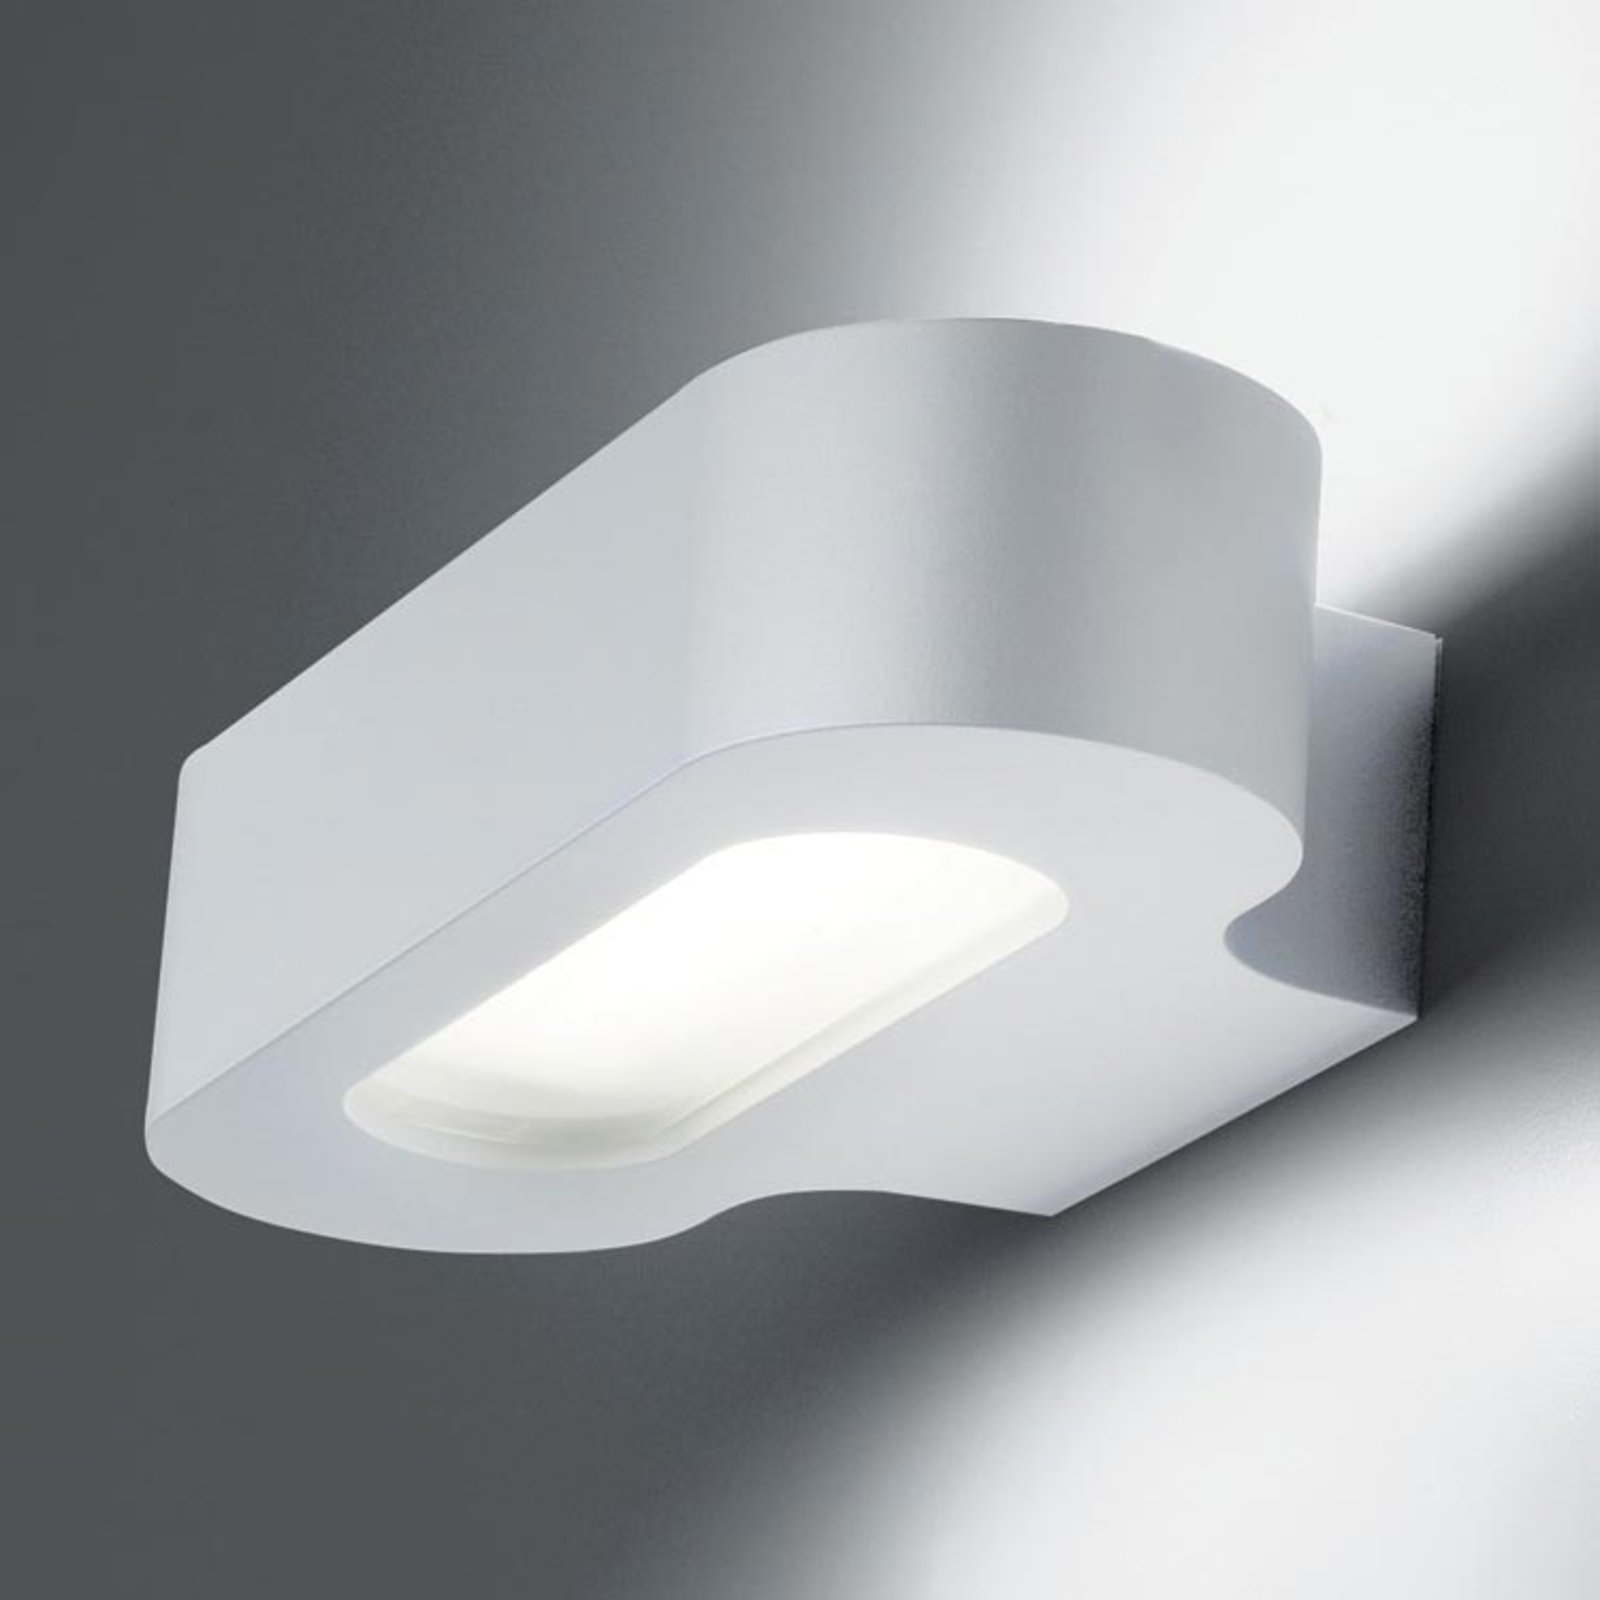 Onvoorziene omstandigheden Vlekkeloos Nathaniel Ward Artemide Talo design-wandlamp R7s 21 cm wit | Lampen24.be